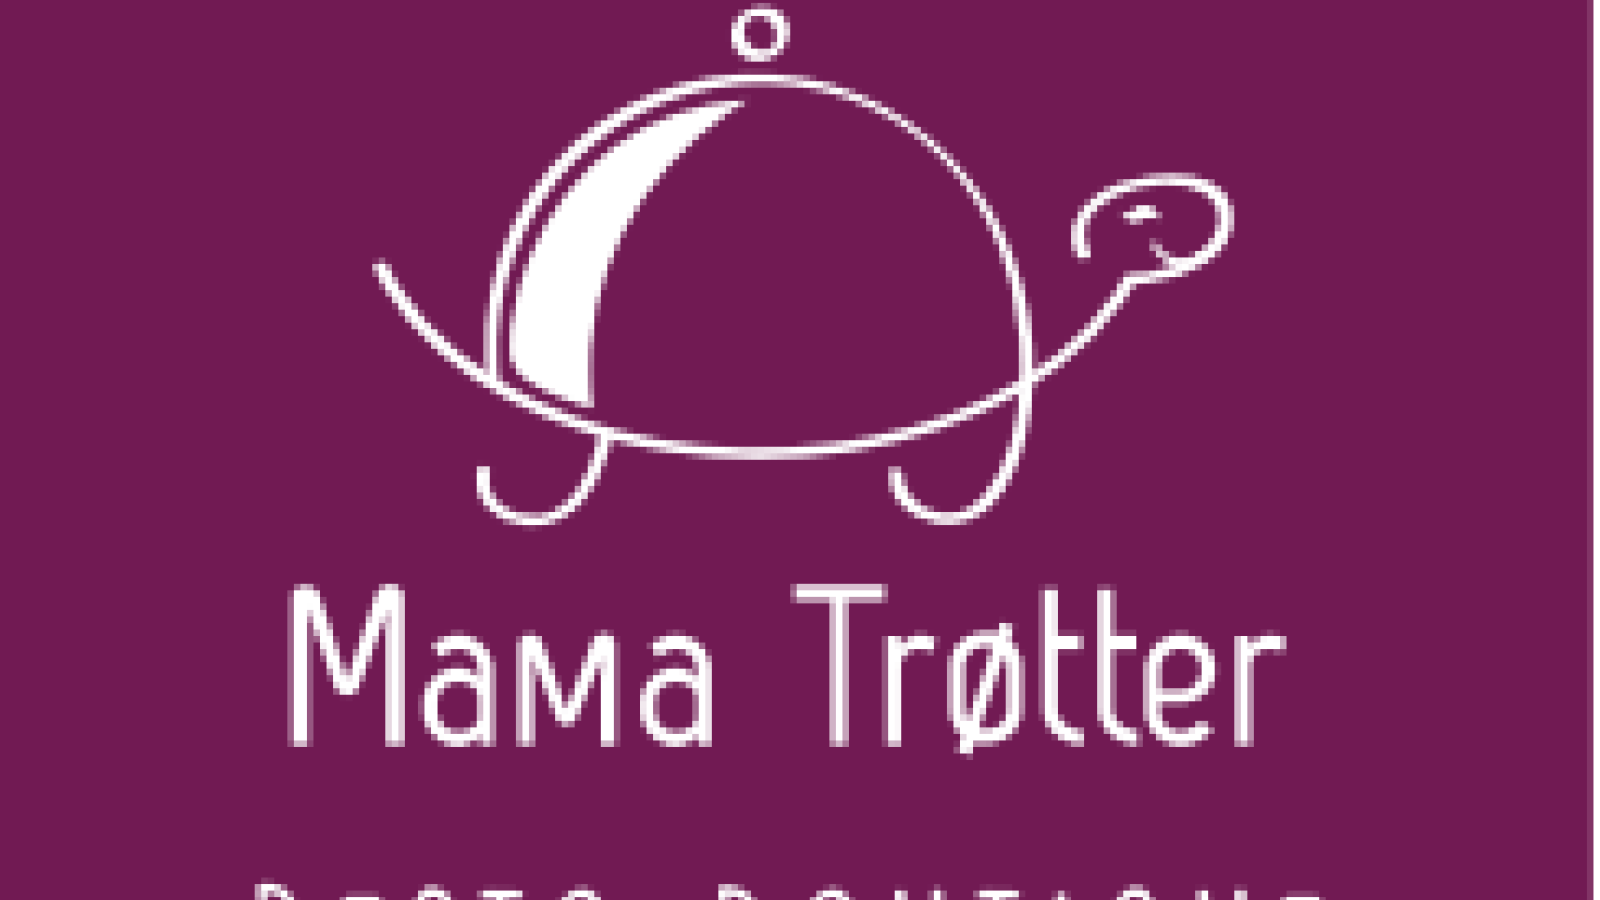 Logo Mama Trotter